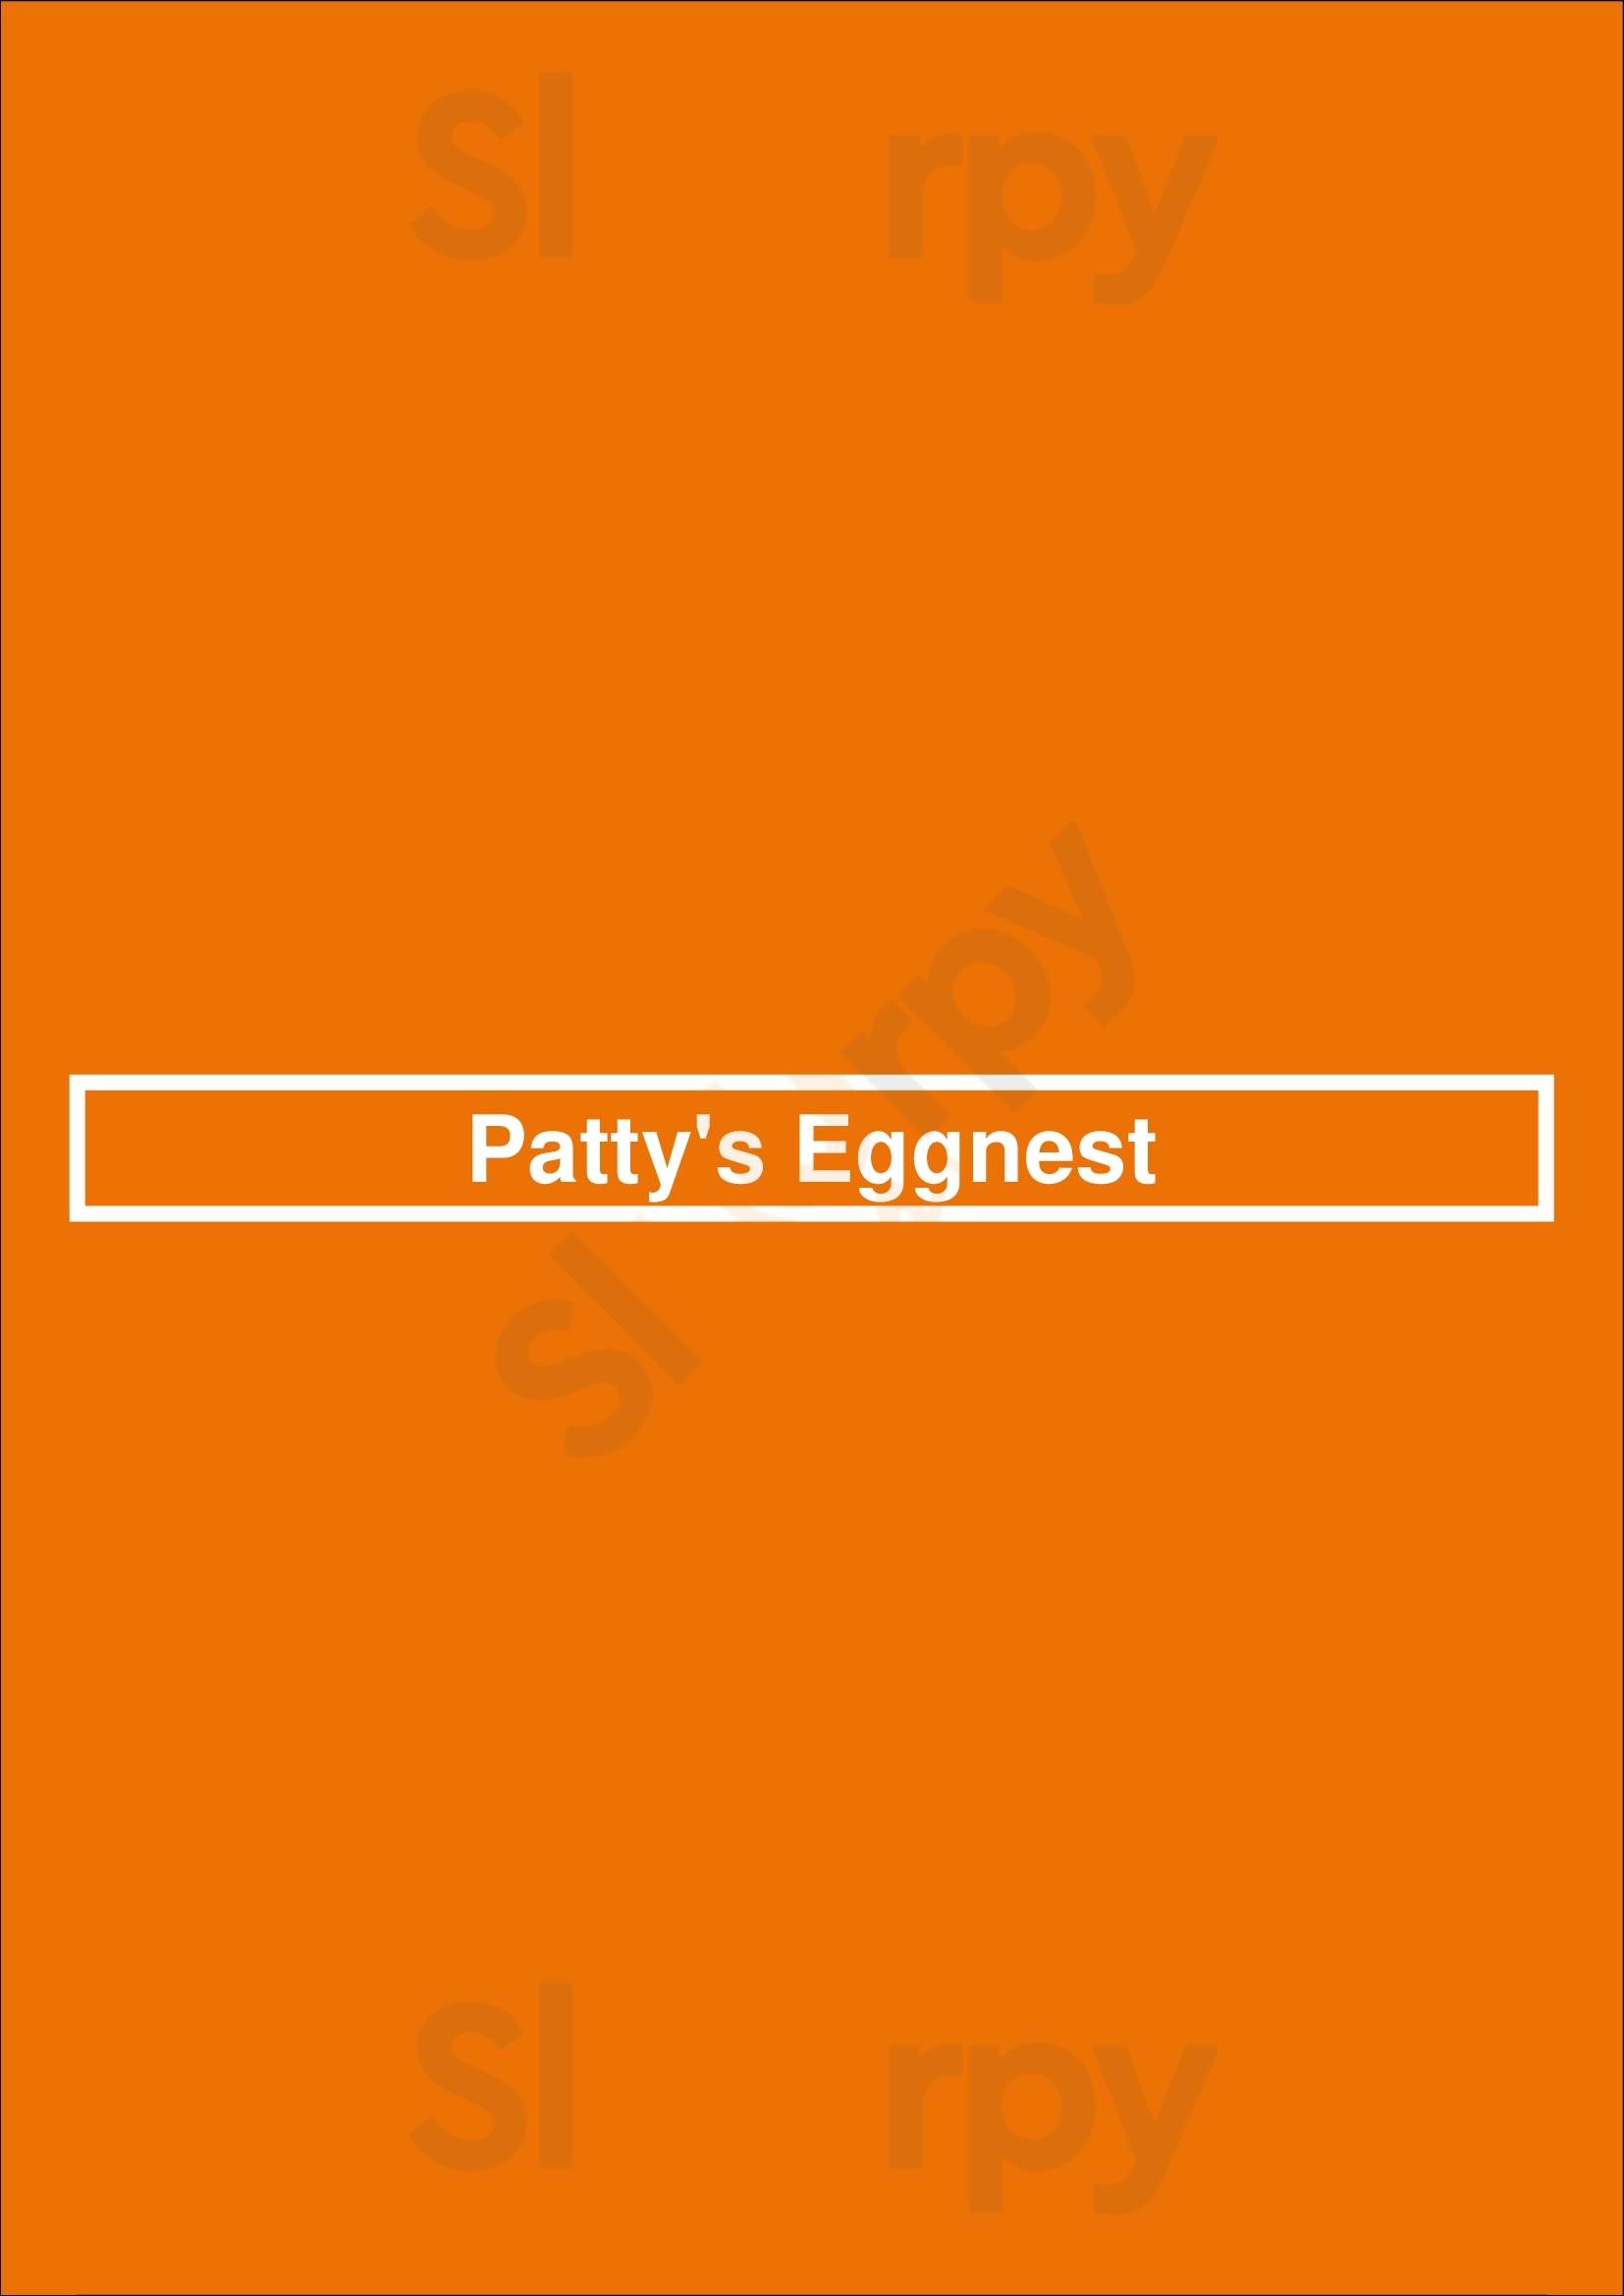 Patty's Eggnest Tukwila Menu - 1